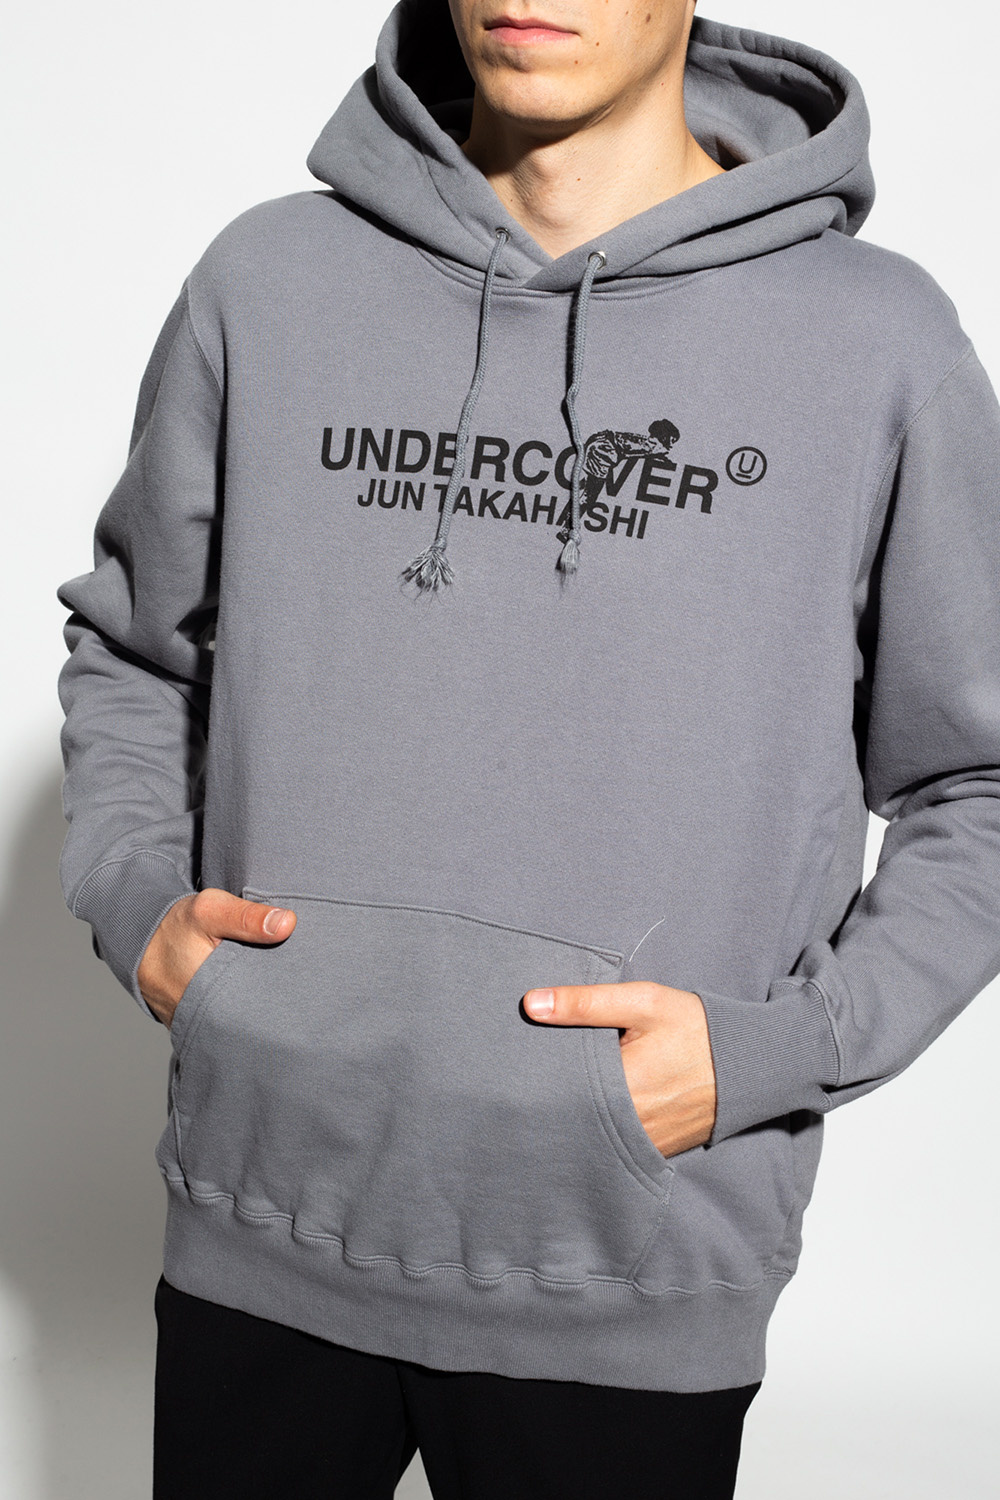 Undercover Logo hoodie